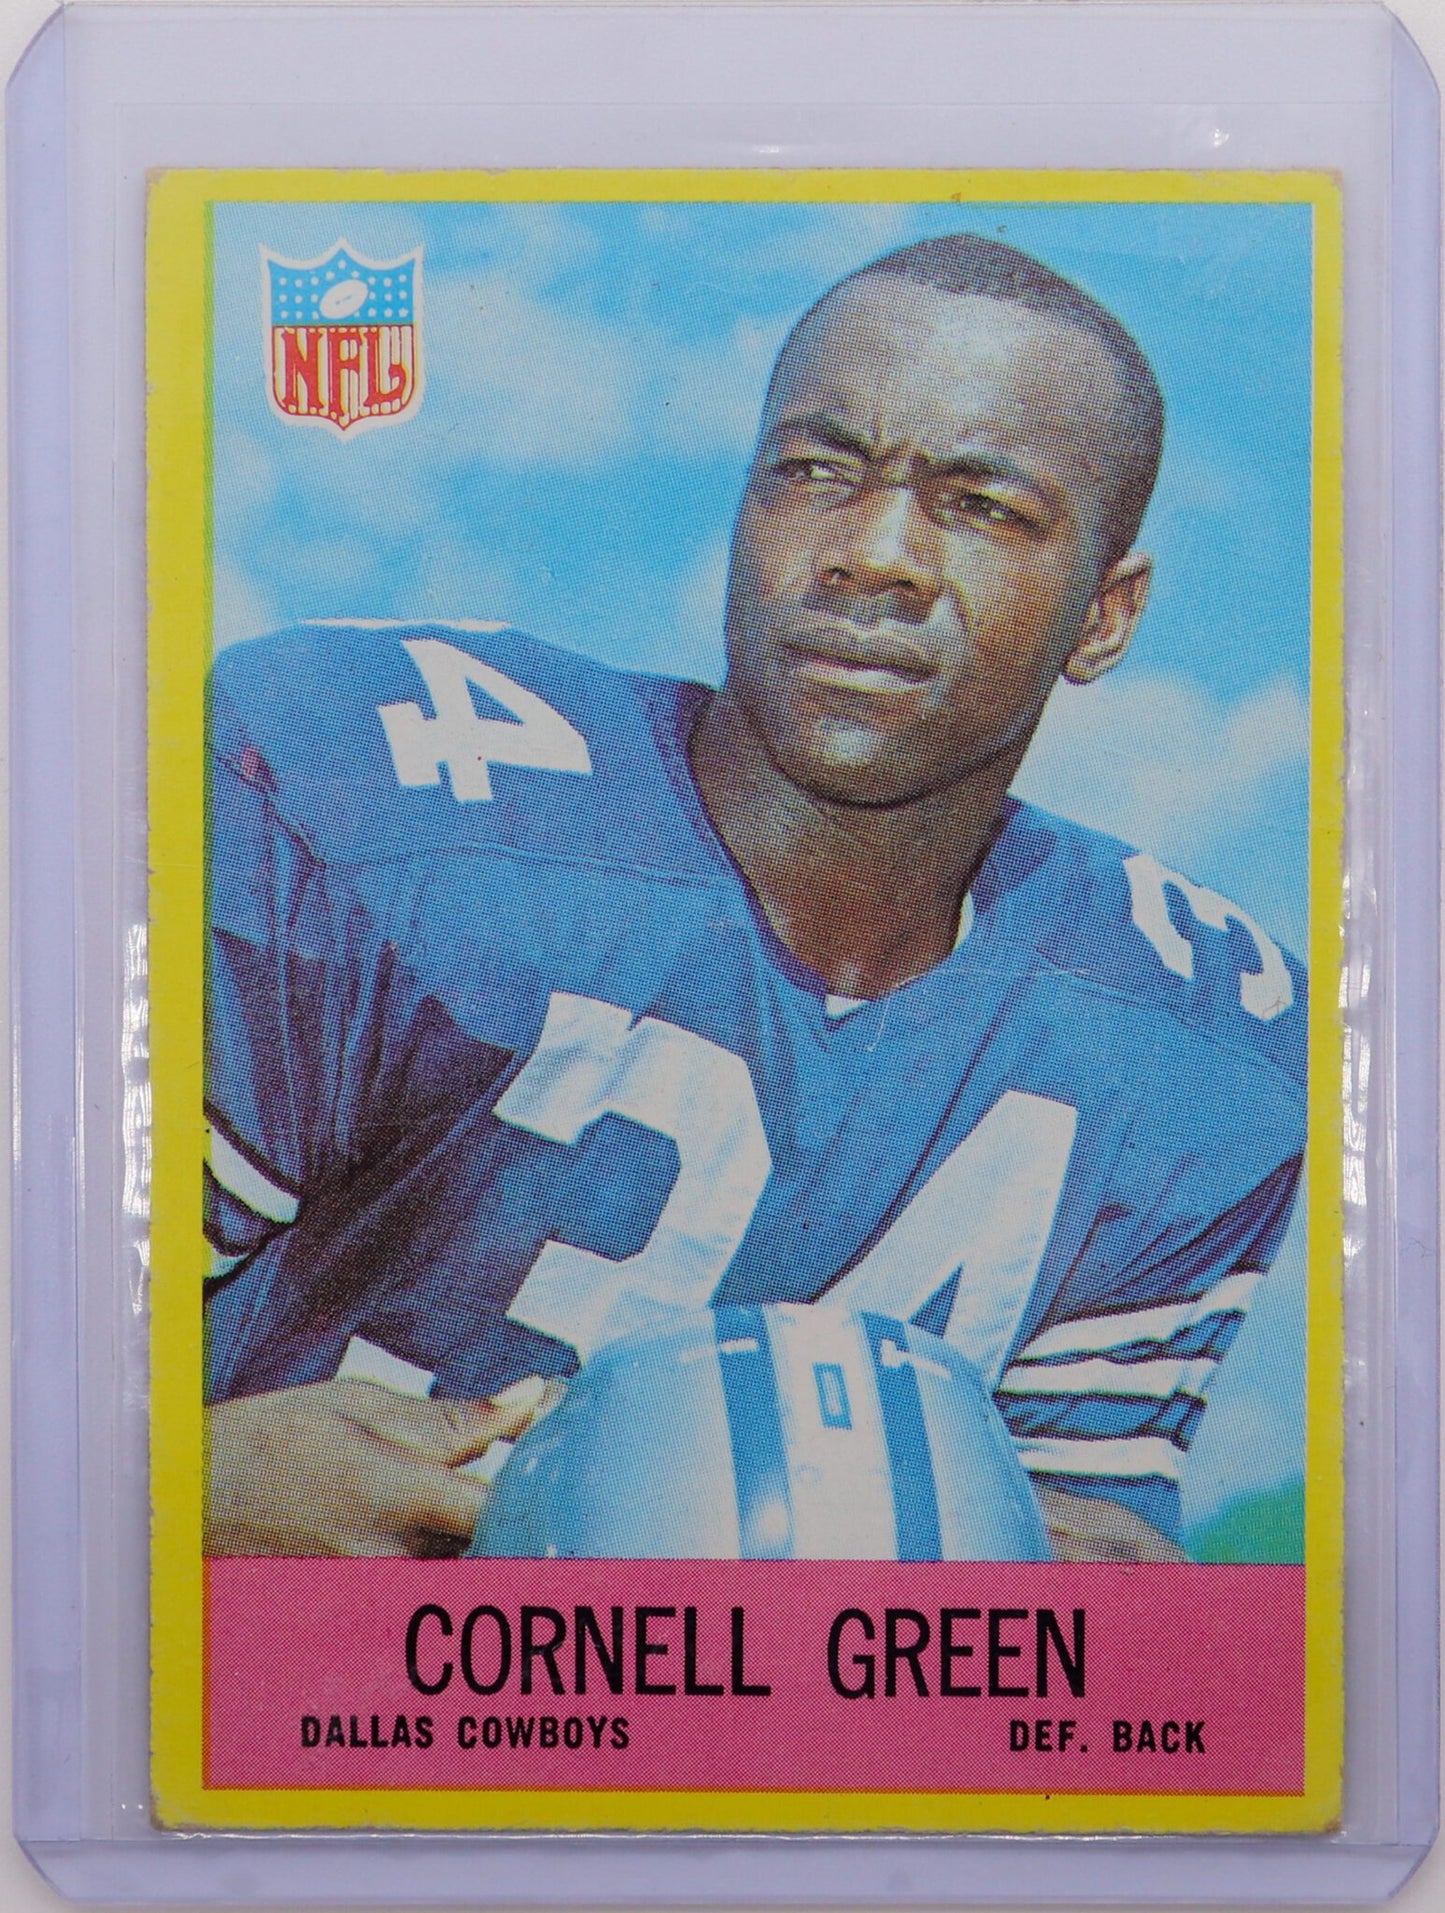 1967 Philadelphia Cornell Green #51, Good/Very Good